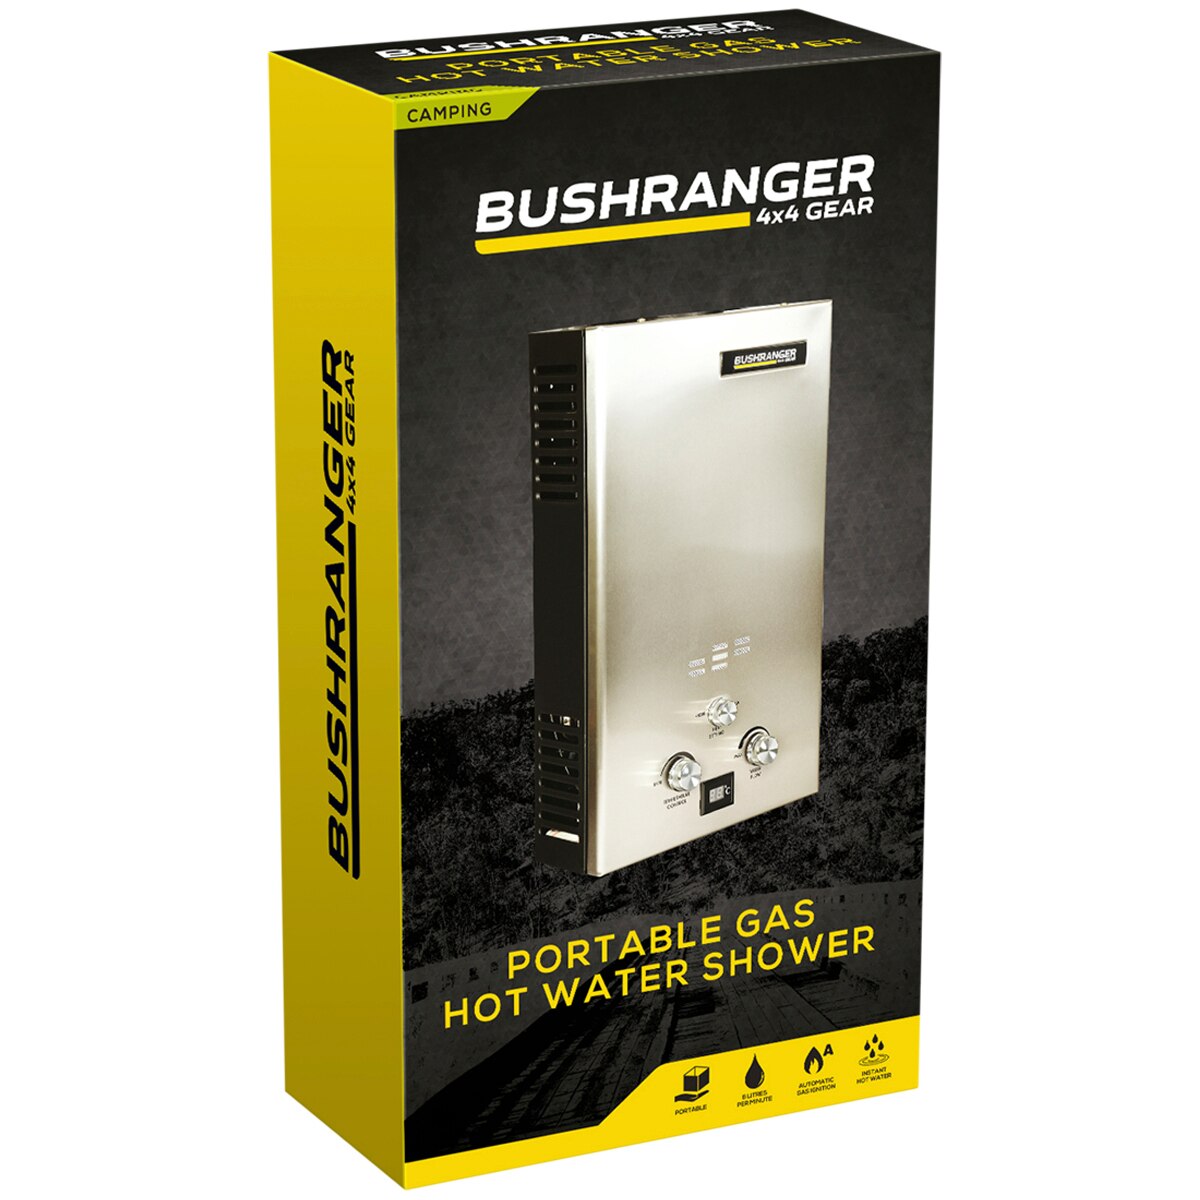 Bushranger Portable Gas Hot Water Shower